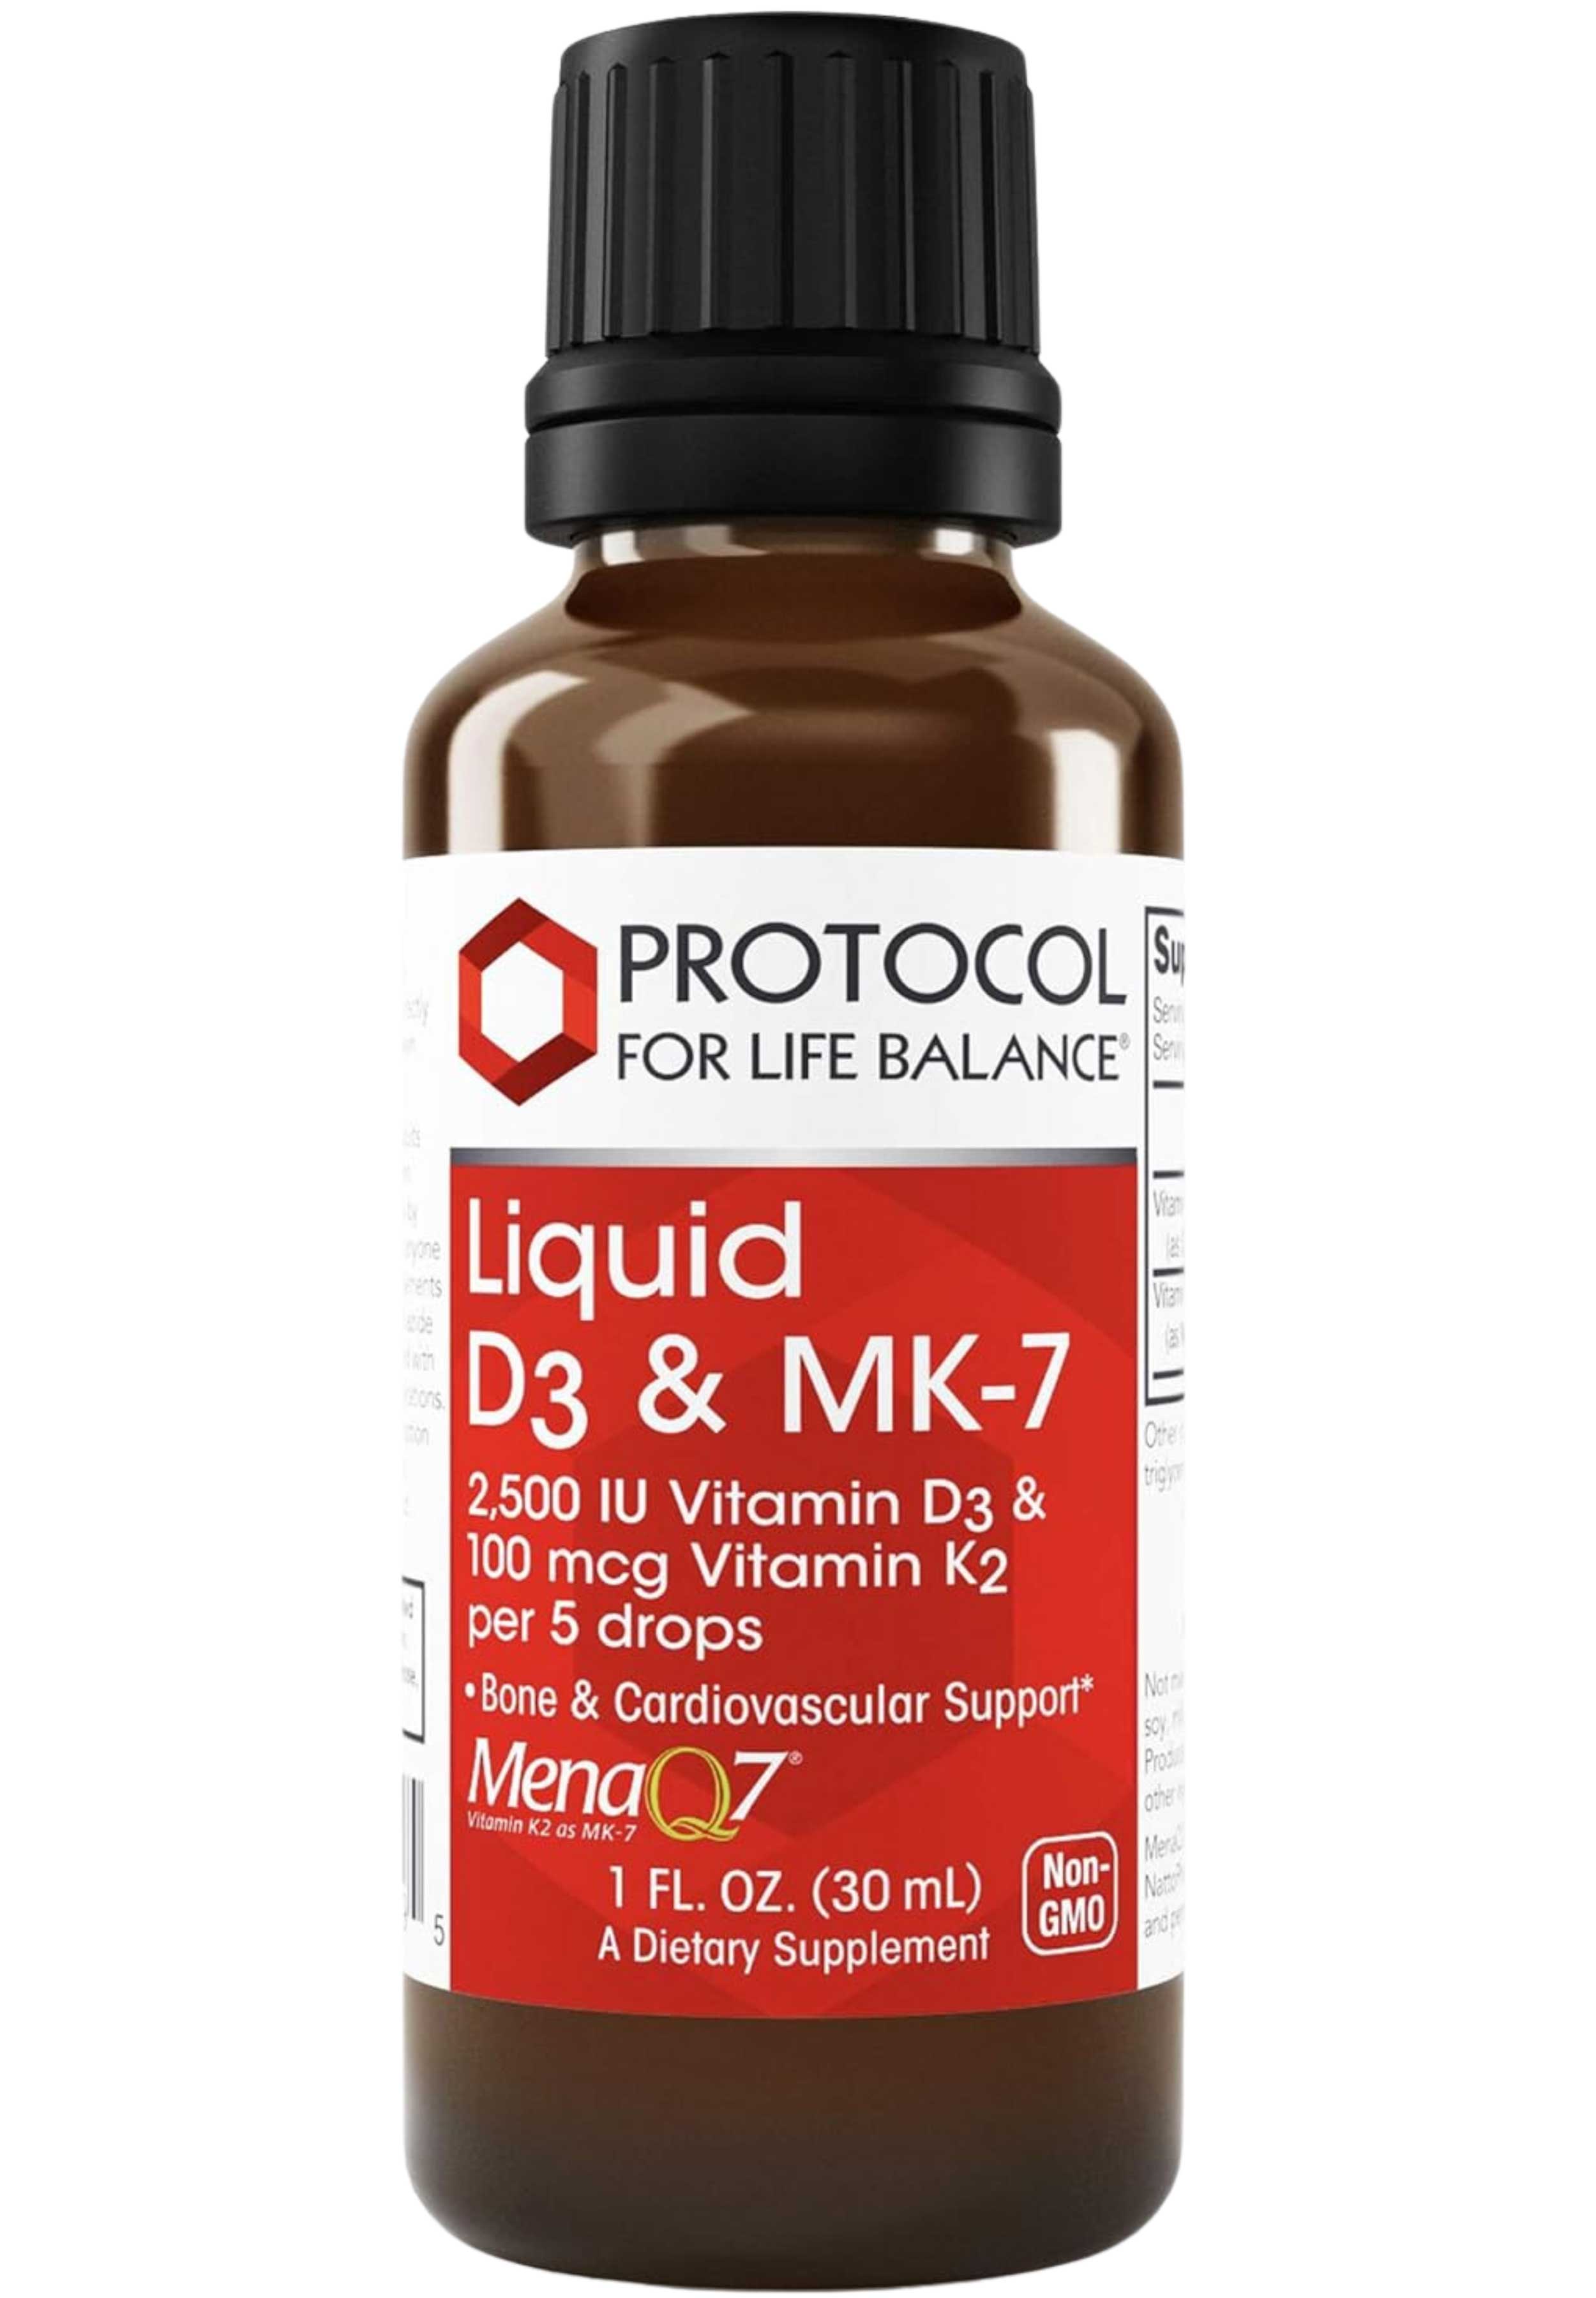 Protocol for Life Balance Liquid D3 & MK-7